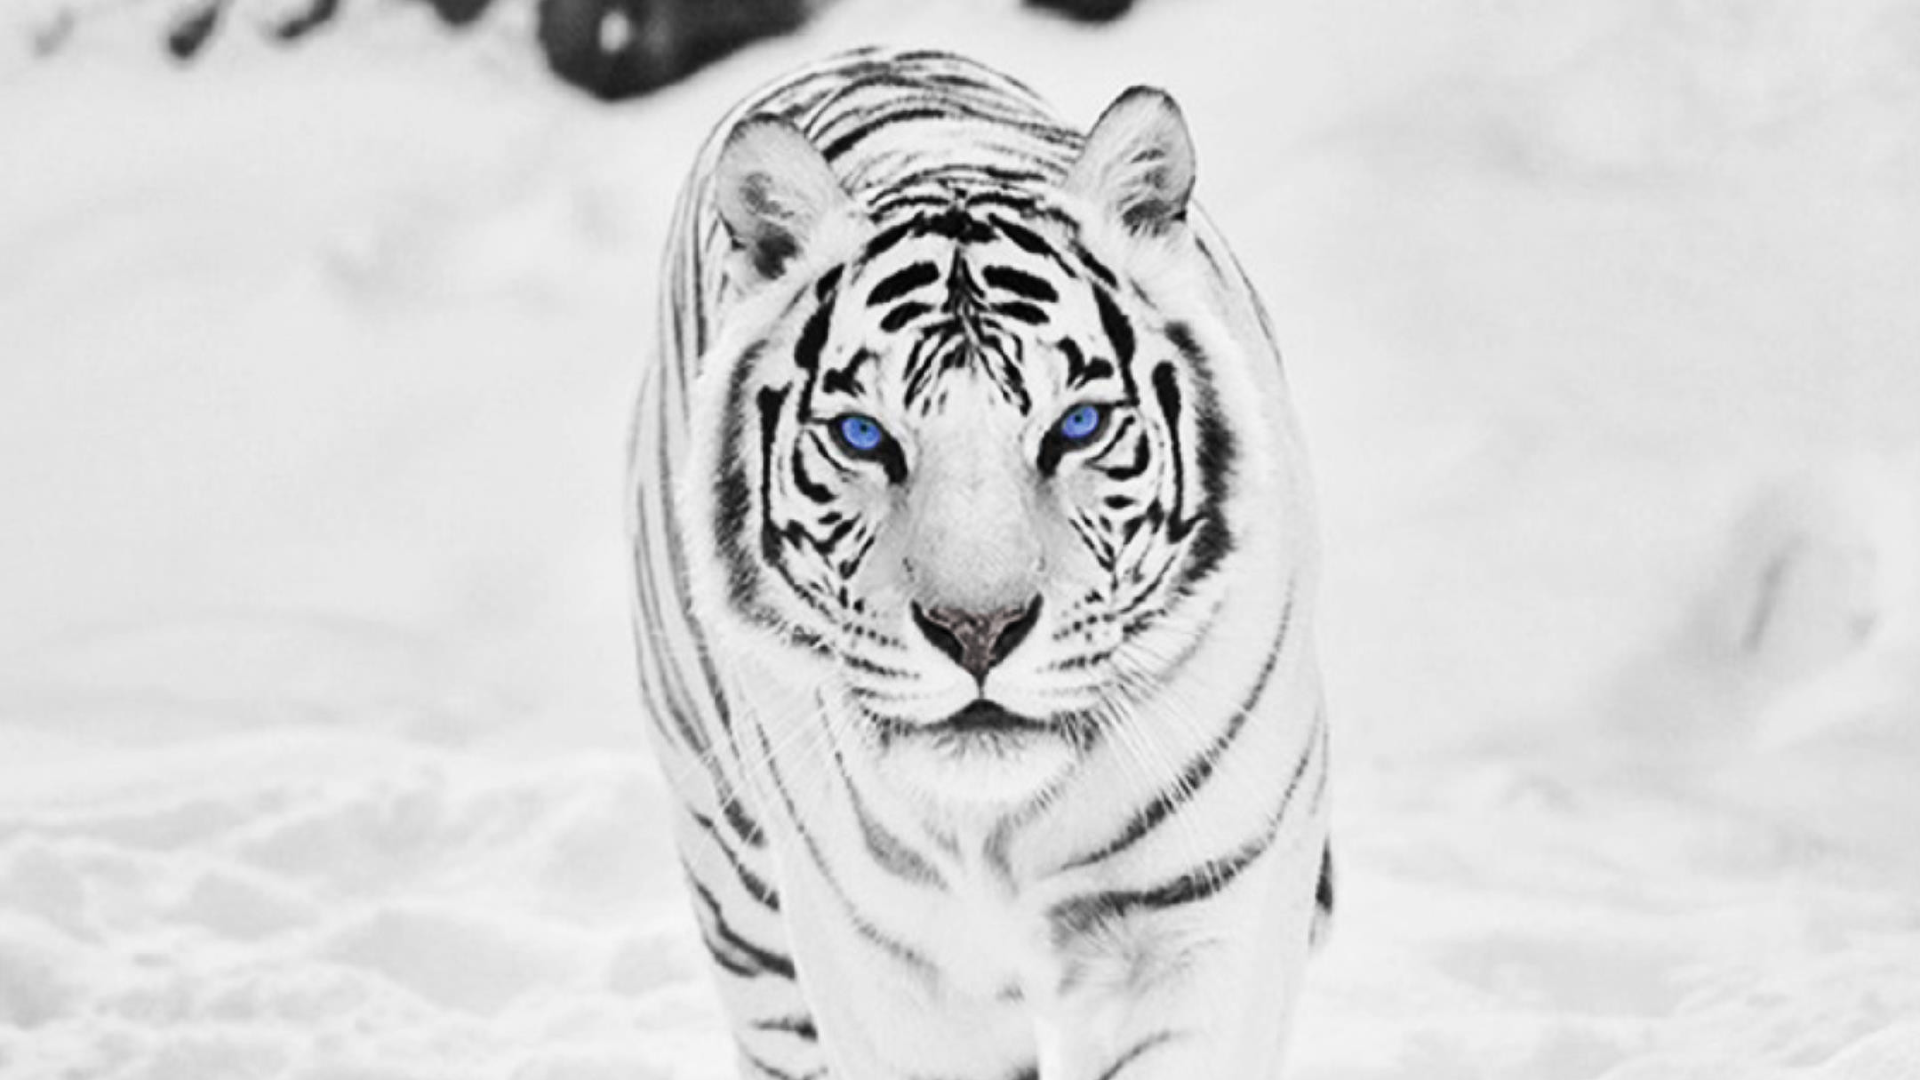 Siberian White Tiger Nexus 5 Wallpaper 1920x1080 1920x1080